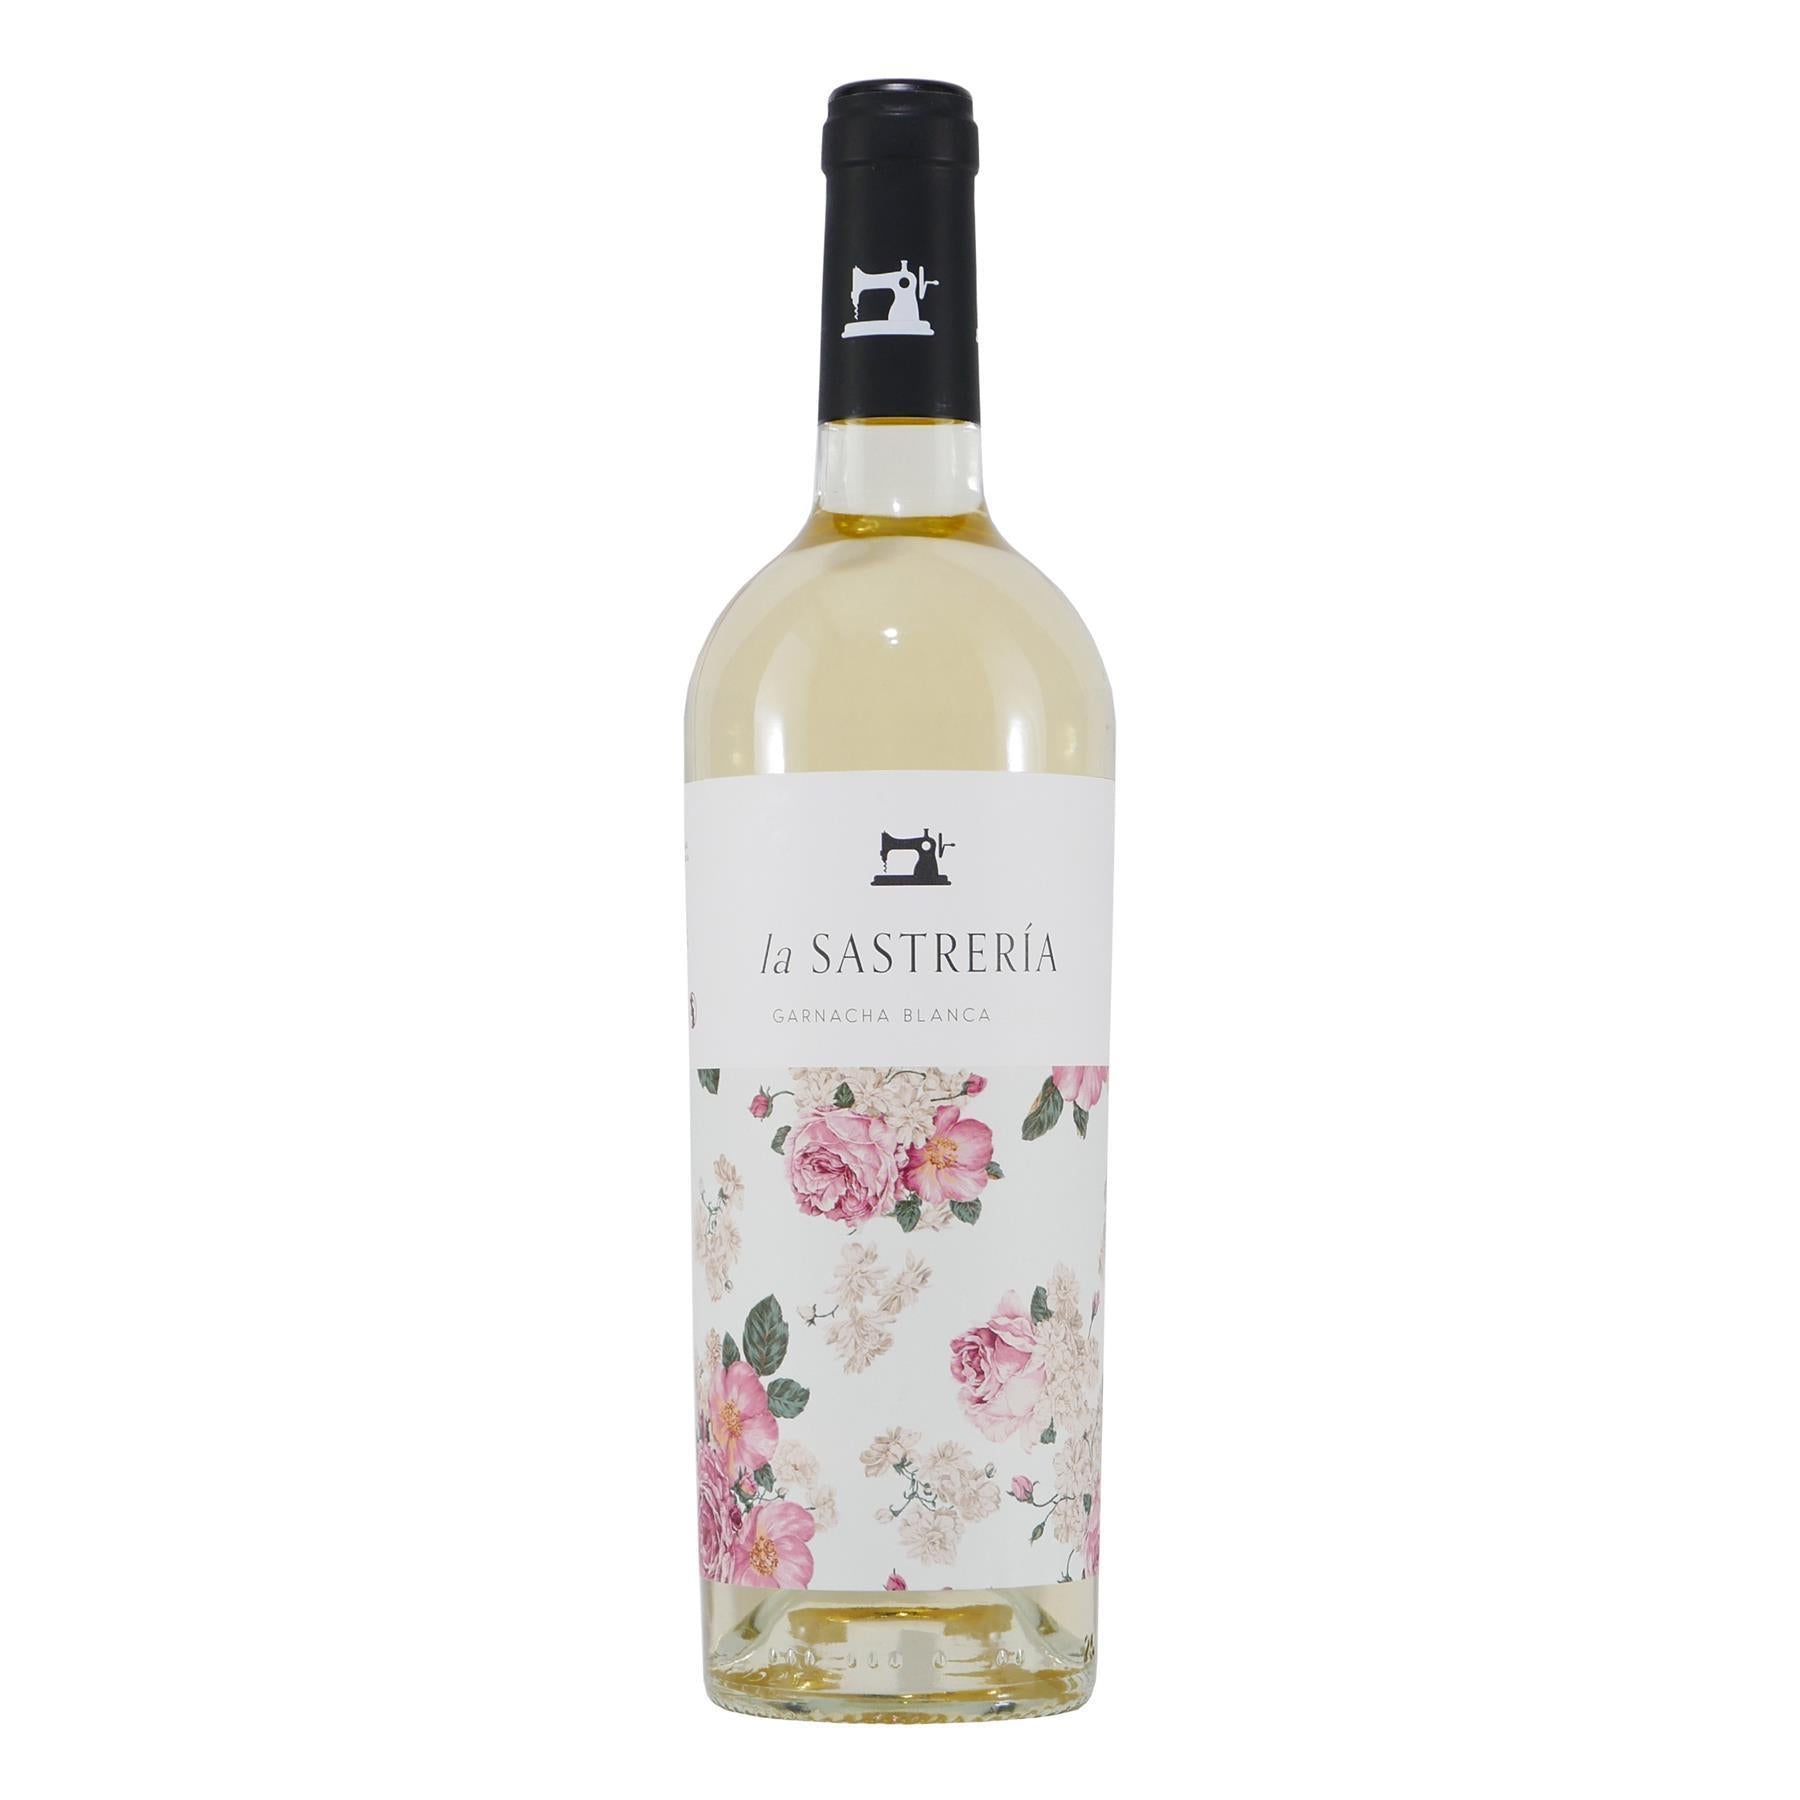 (6 0,75L) x Sastreria La -trocken- Blanca Weißwein